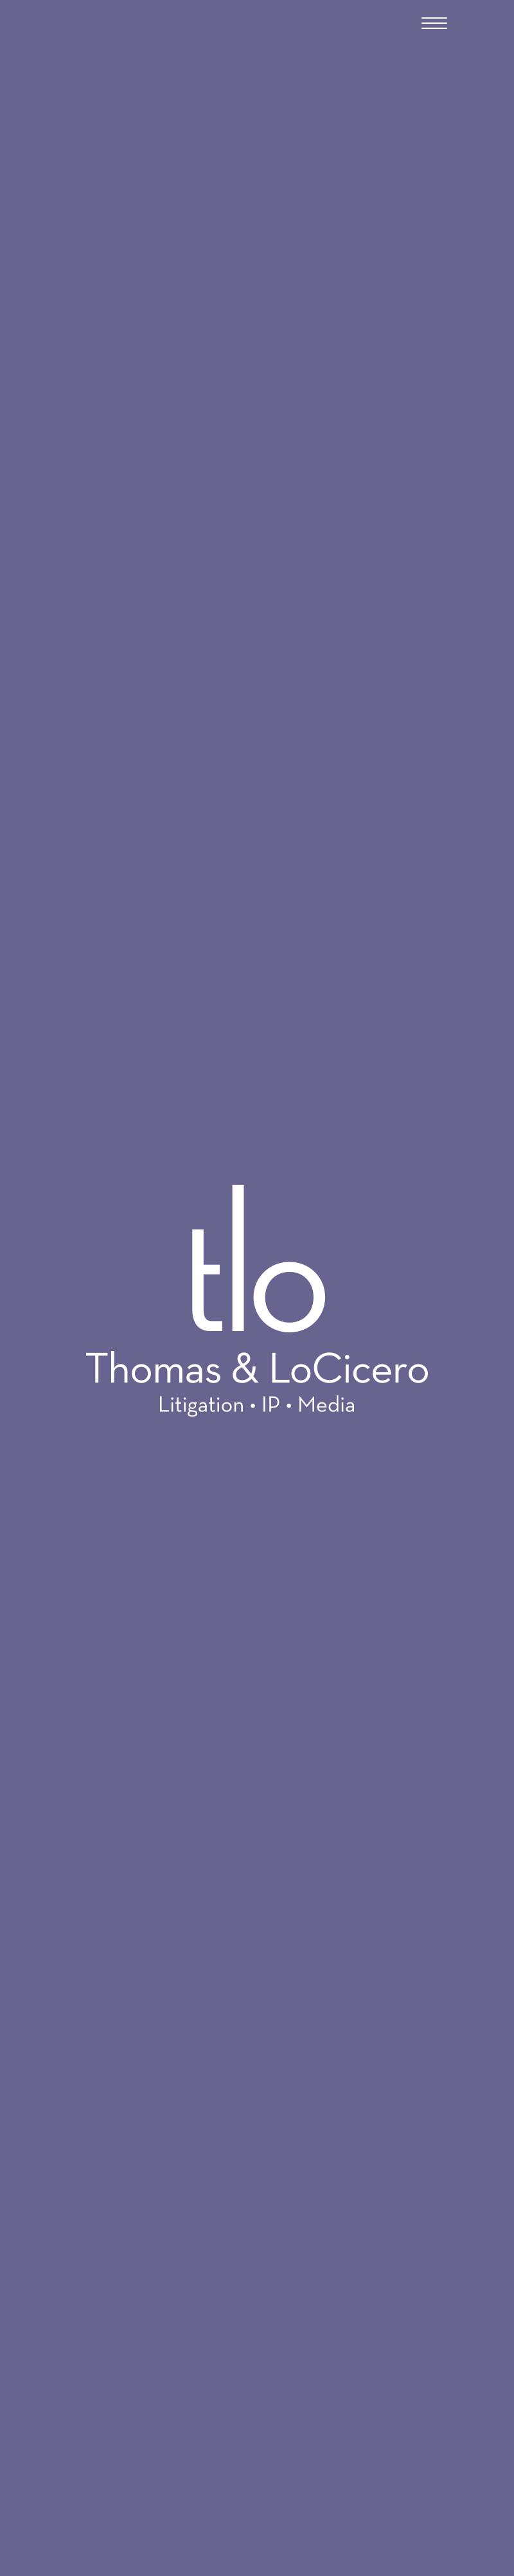 Thomas & LoCicero PL - Lake Worth FL Lawyers